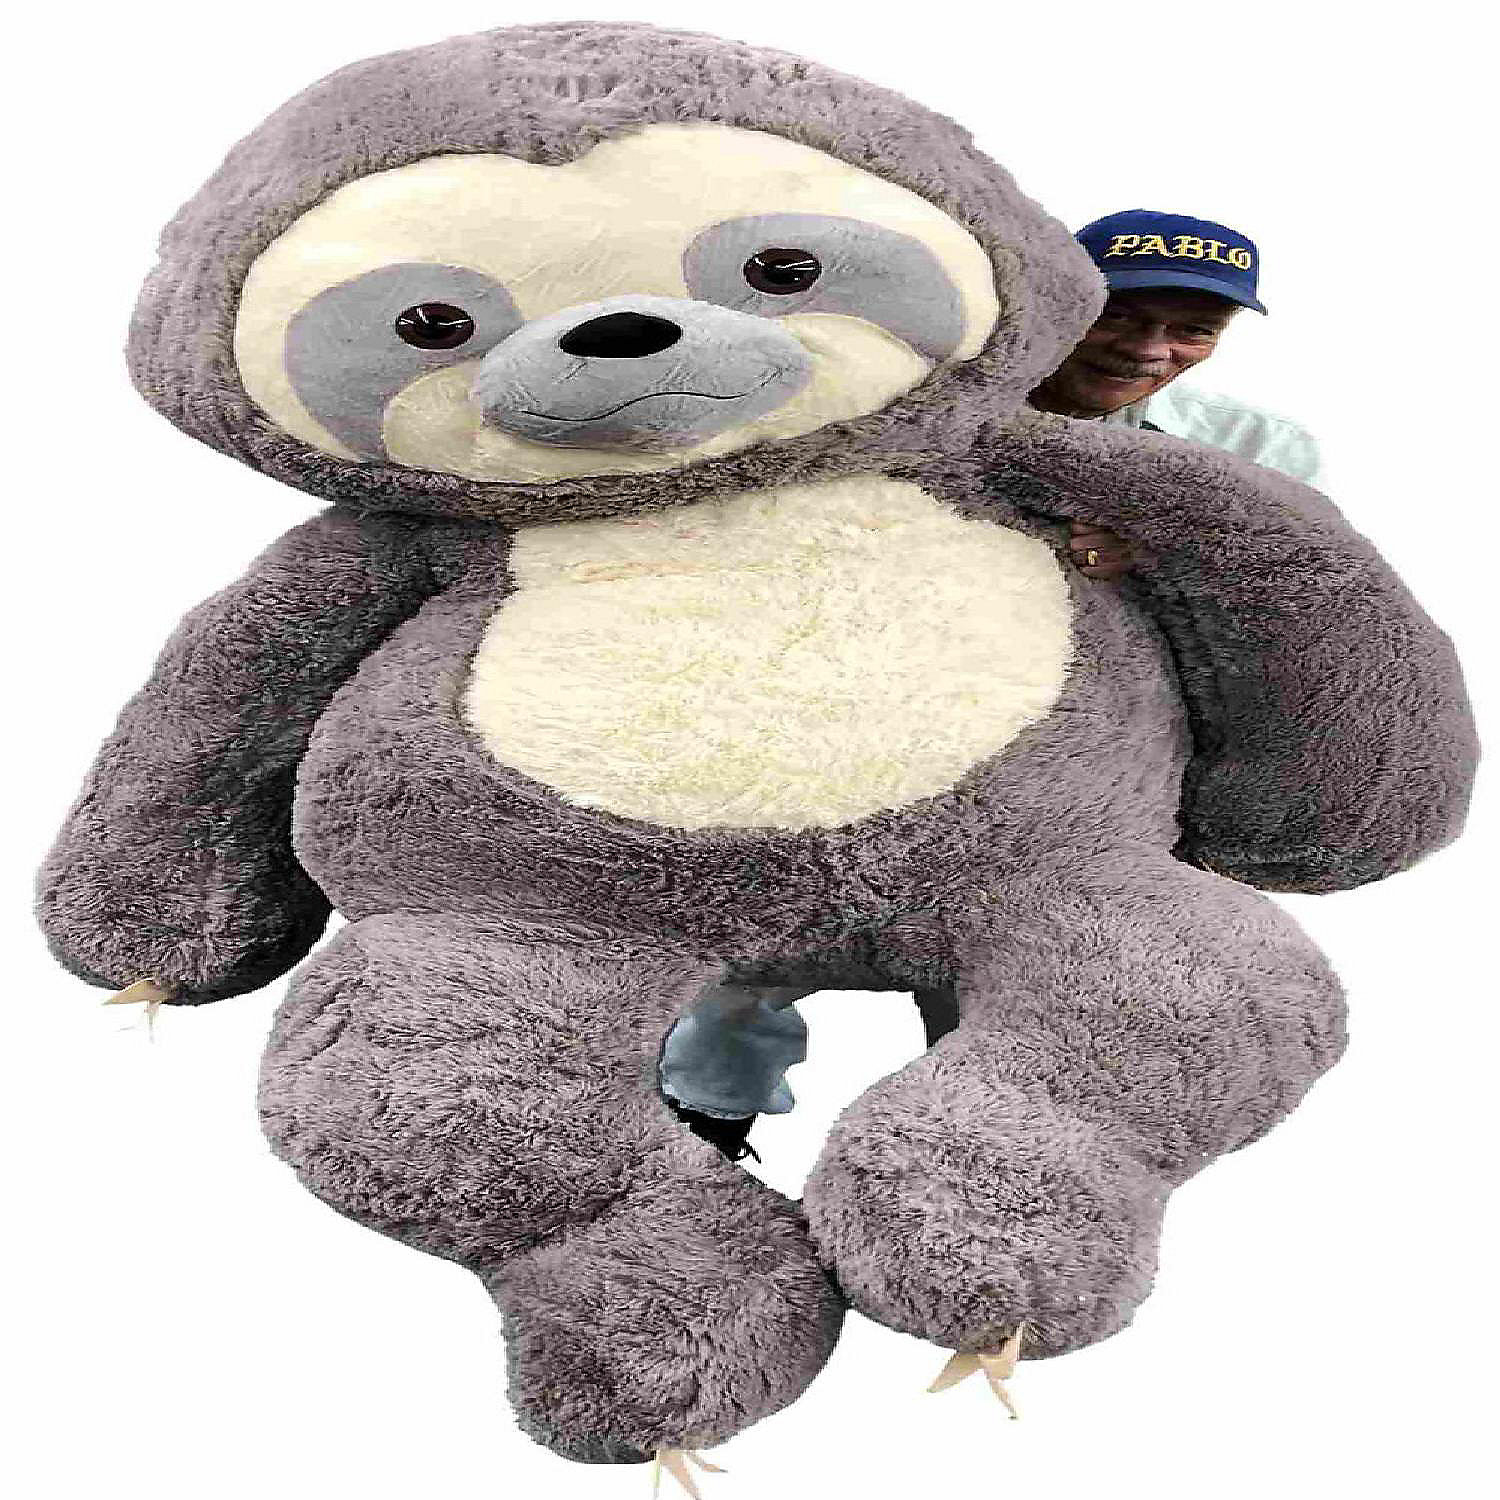 Big Plush Giant Stuffed Sloth 7 Feet Tall 84 Inches Soft 213 cm Big Plush  Huge Stuffed Animal Gray Color | Oriental Trading